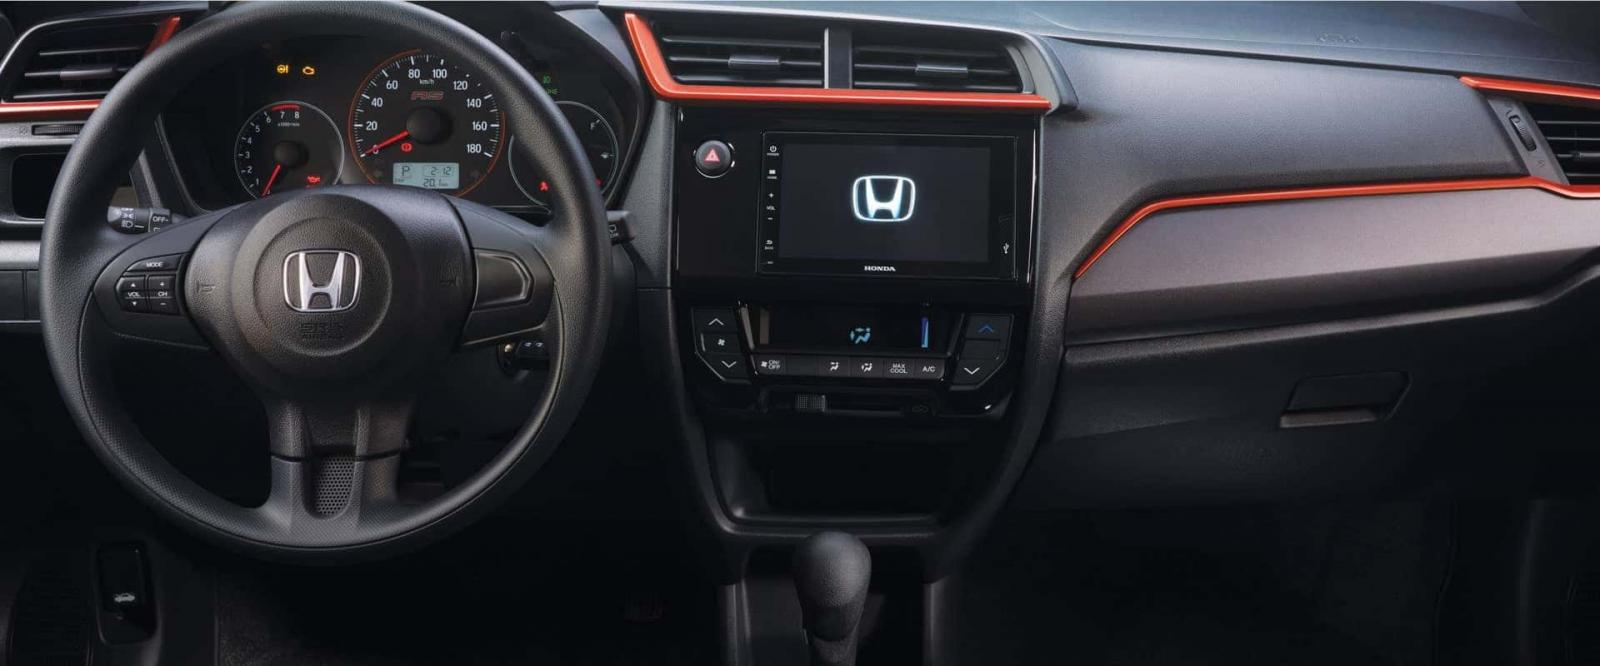 2022 Honda Brio interior